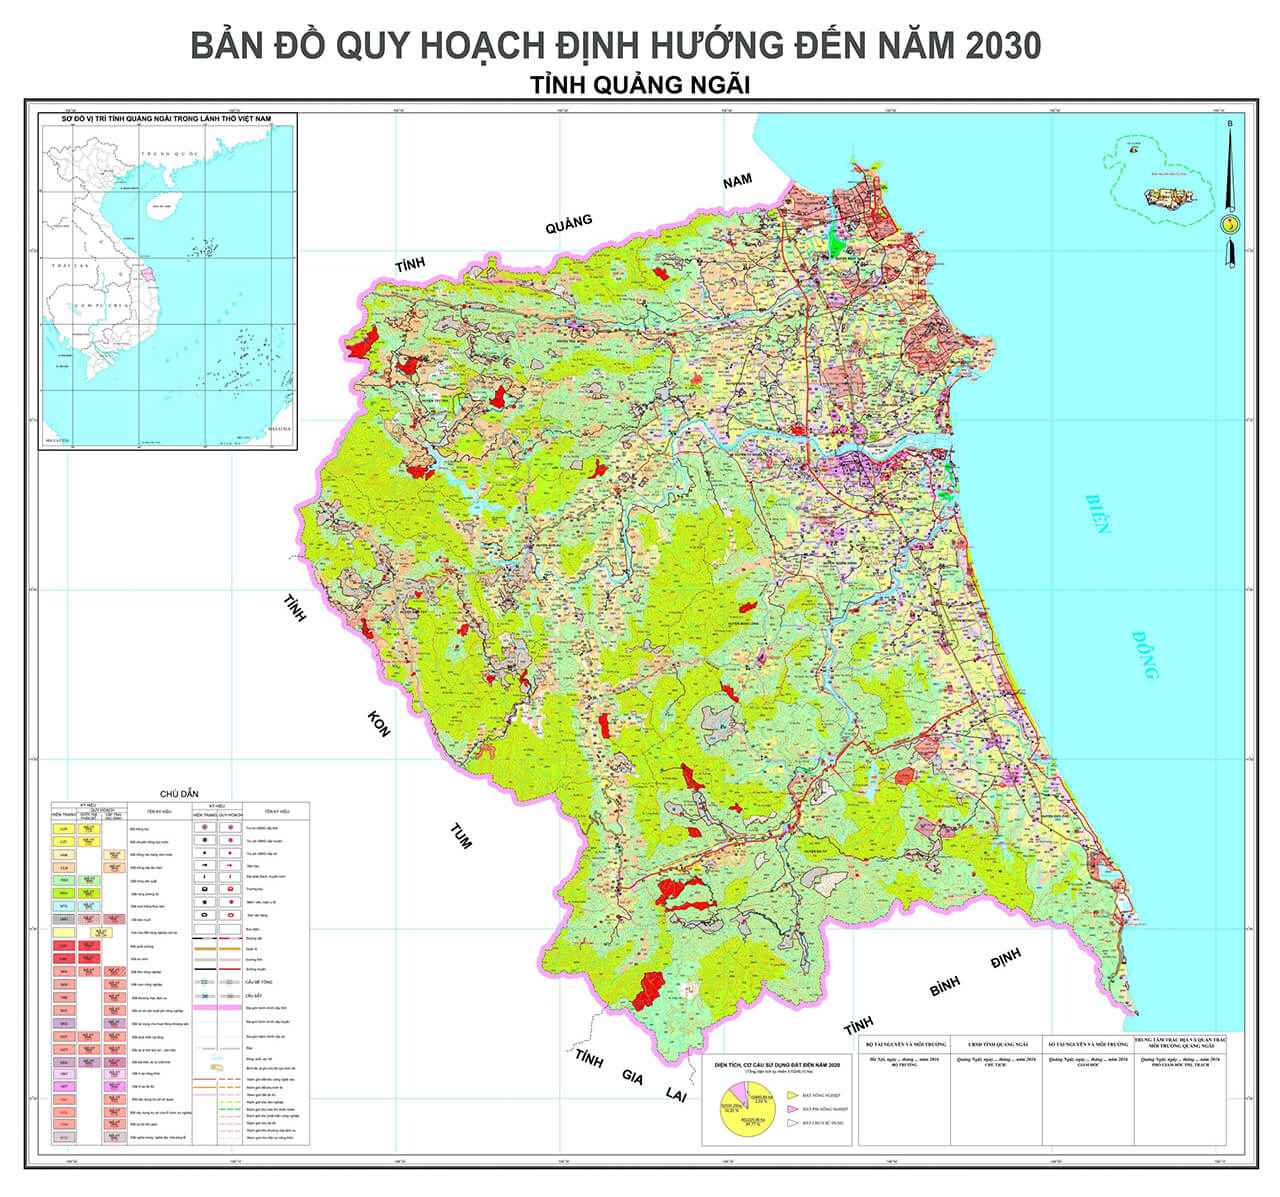 ban-do-quy-hoach-huyen-minh-long-tinh-quang-ngai-den-nam-2030